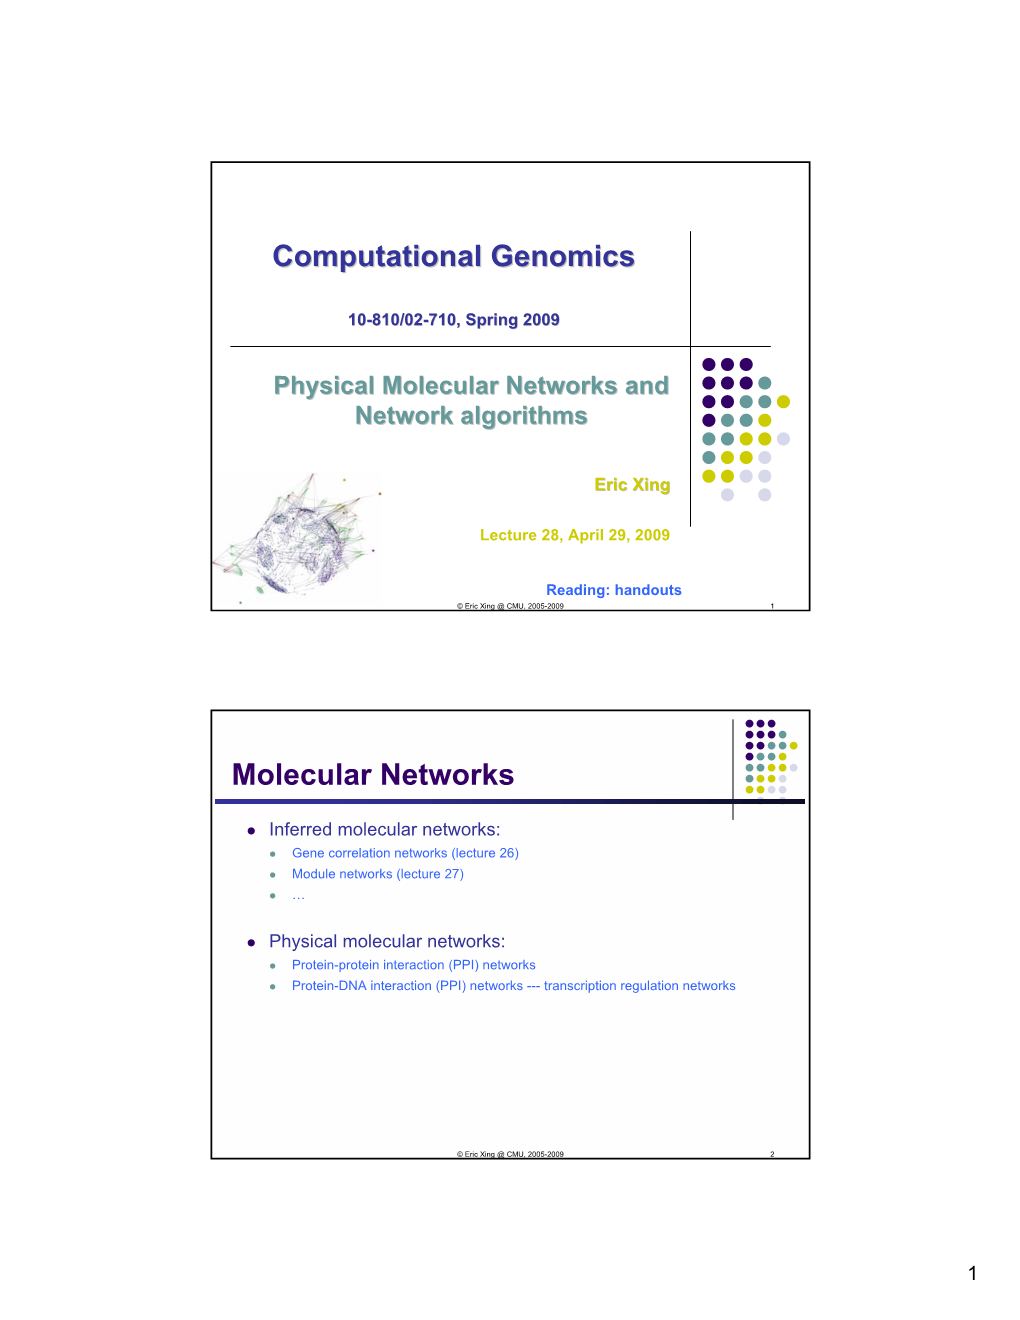 Computational Genomics Molecular Networks